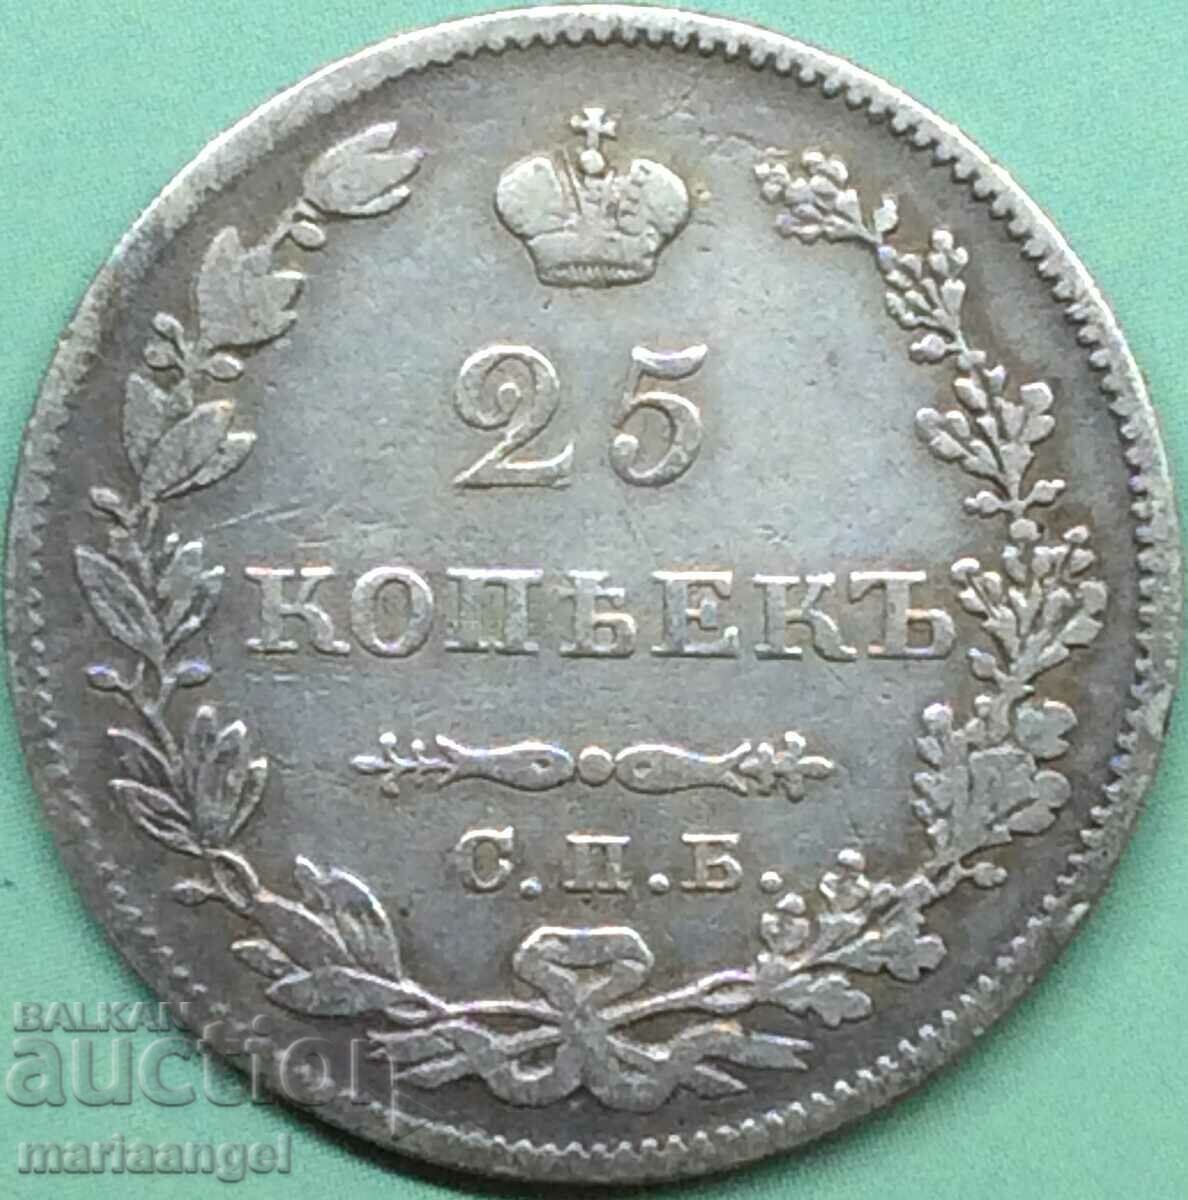 25 kopecks 1827 Russia Nicholas I 1825-1855 silver - rare